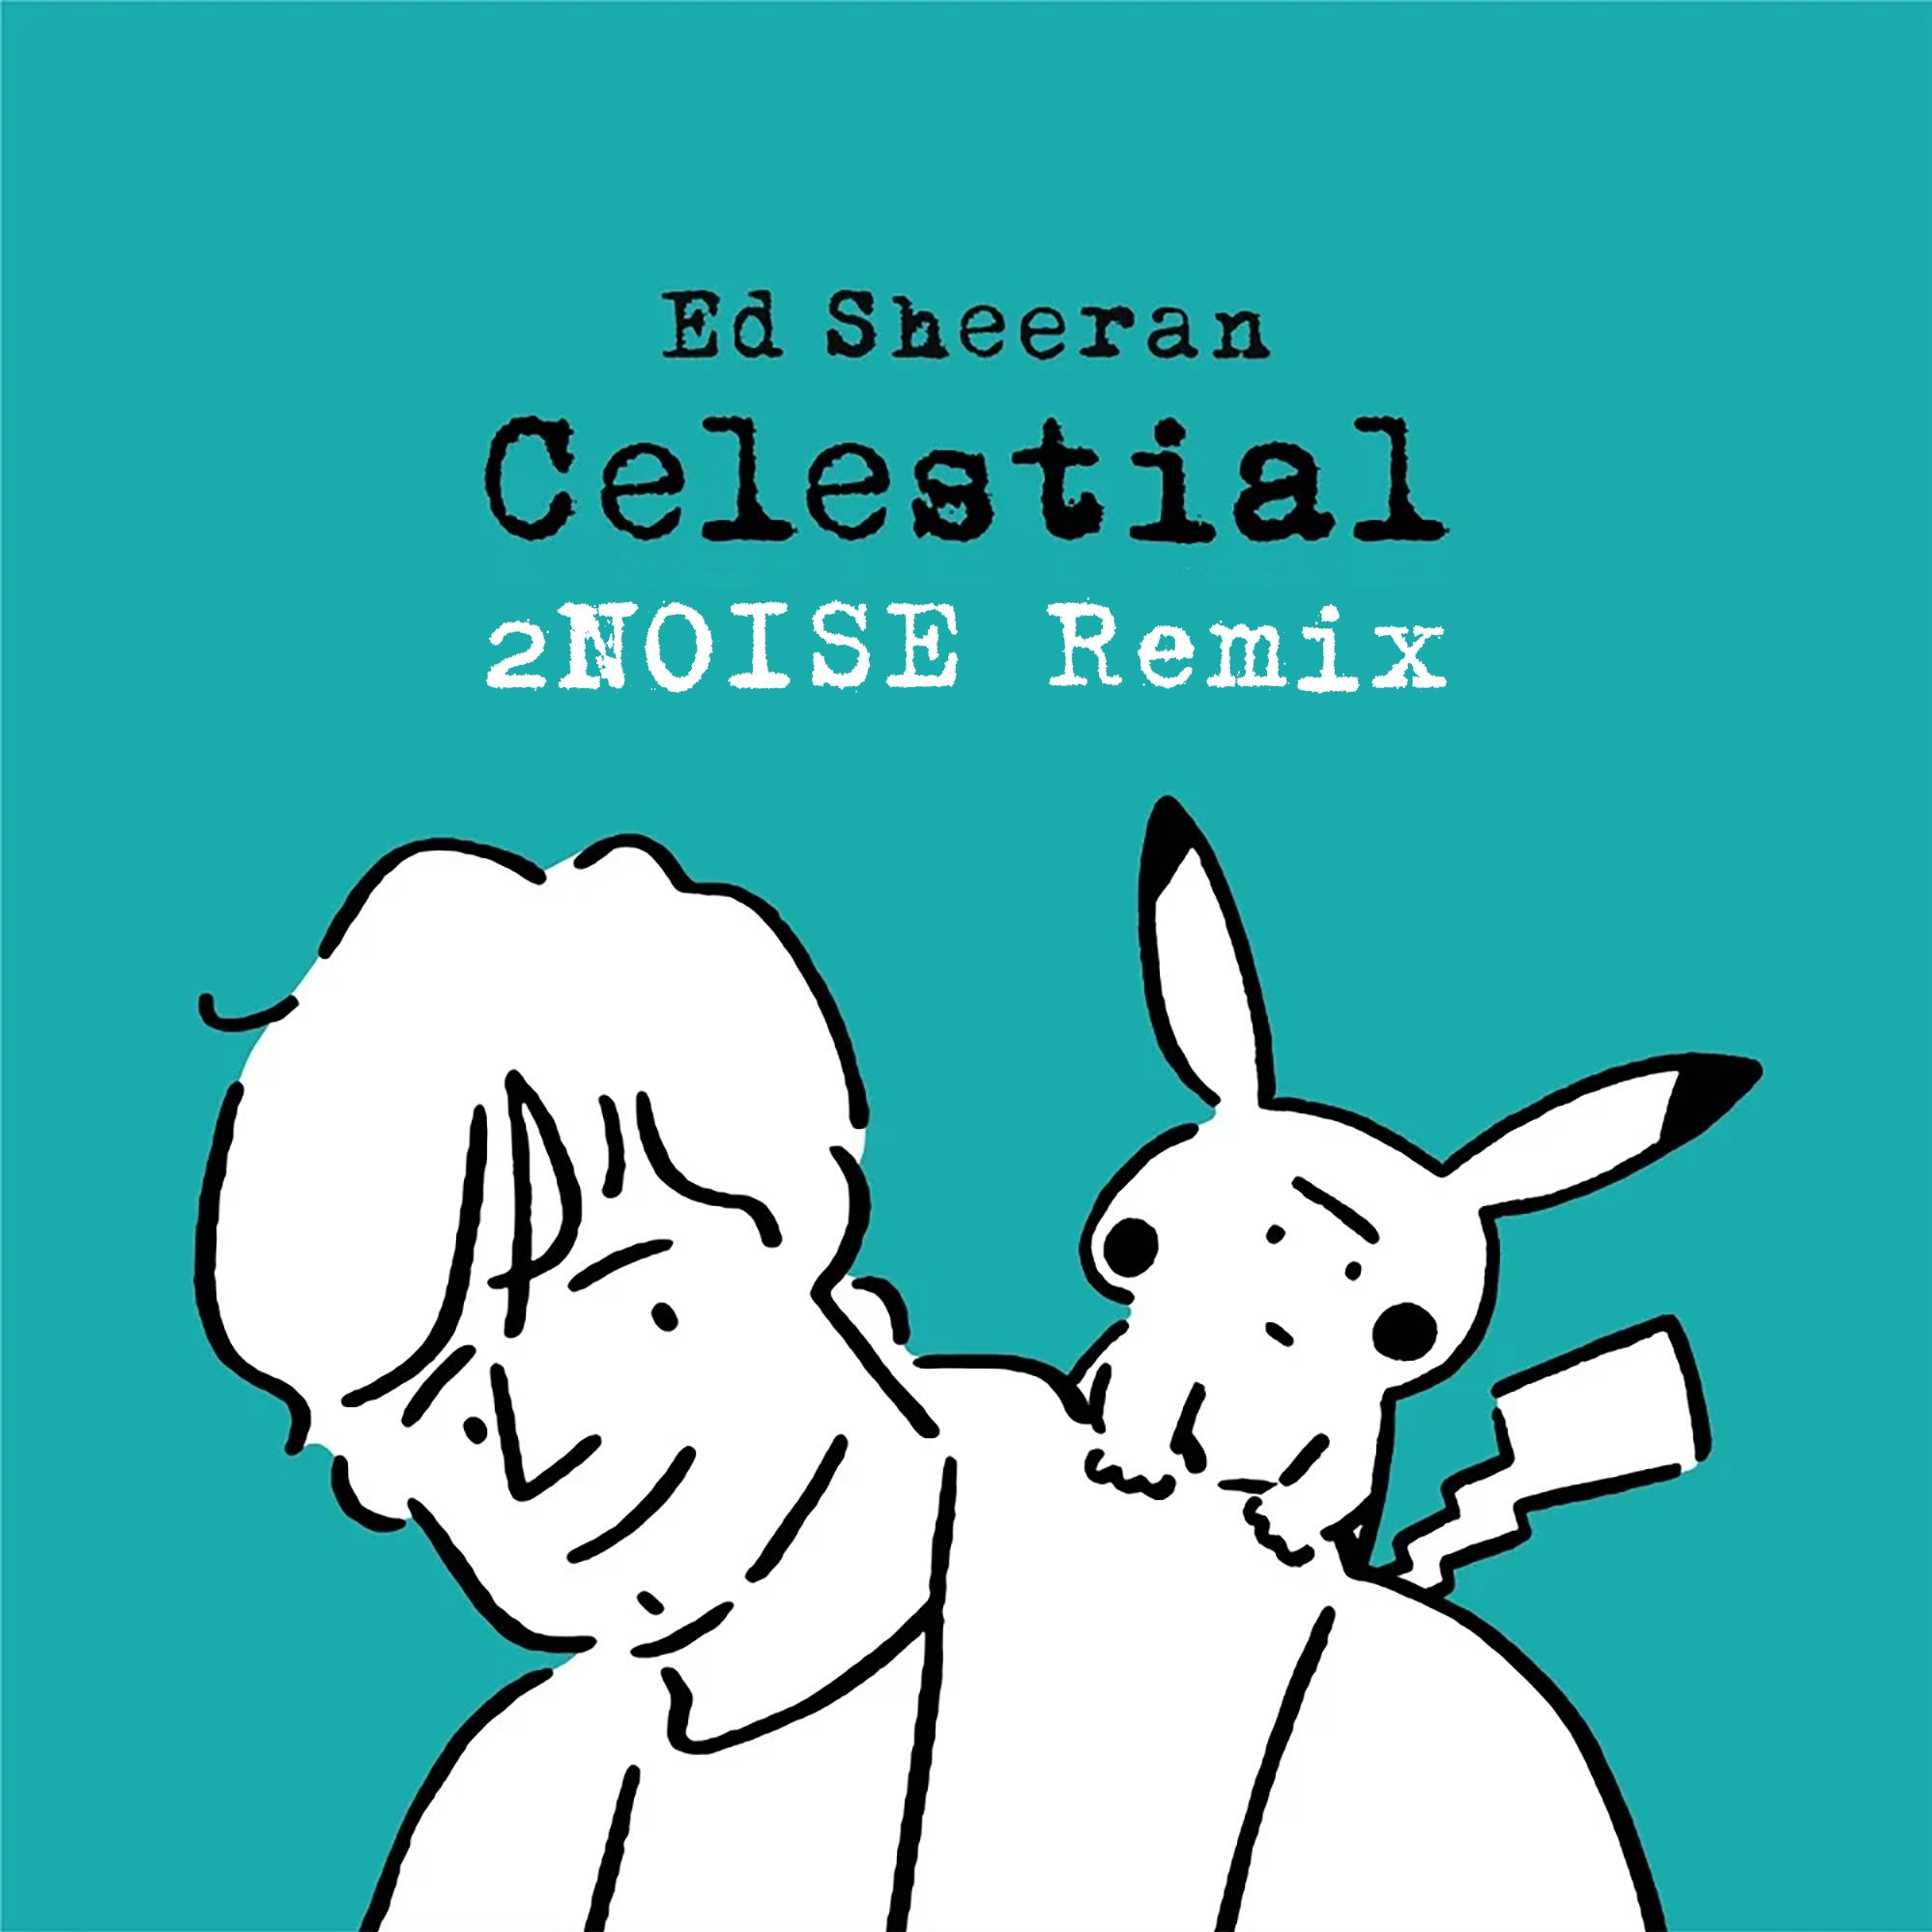 I-download Ed Sheeran - Celestial (2NOISE Remix) [Progressive]